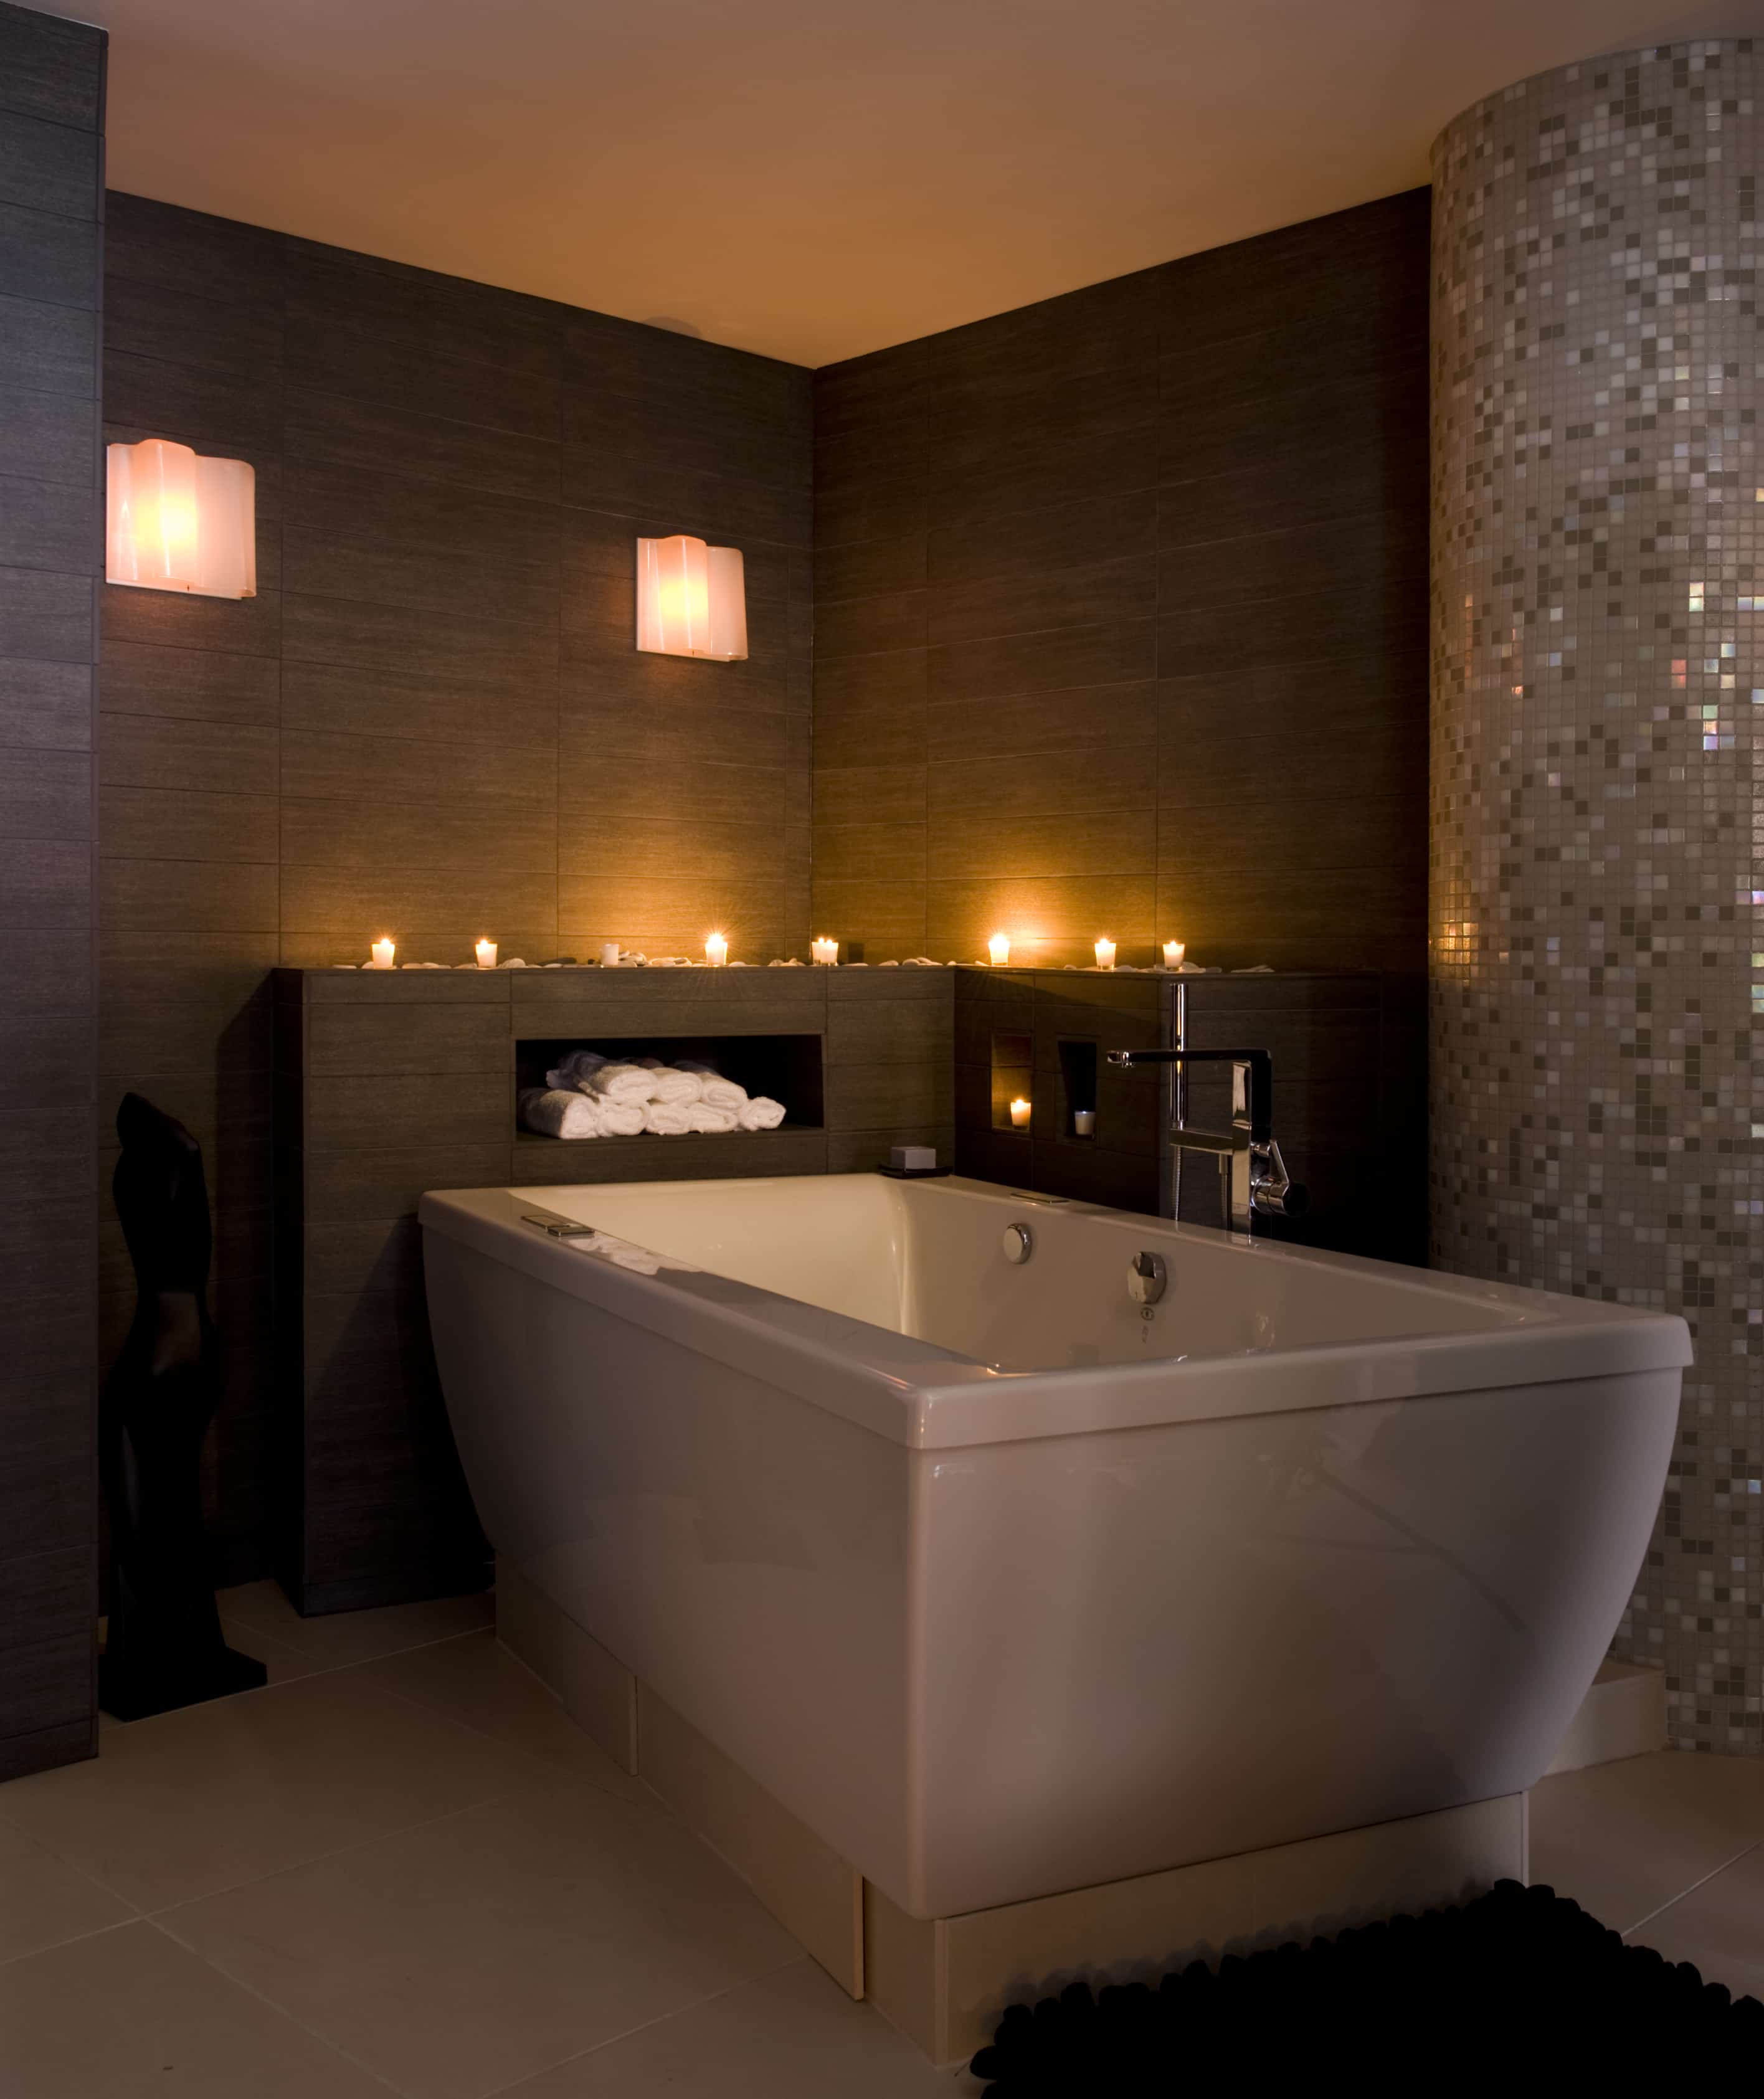 spa inspired bathroom with lighting - Подарите своей ванной комнате спа-салон, которого она заслуживает